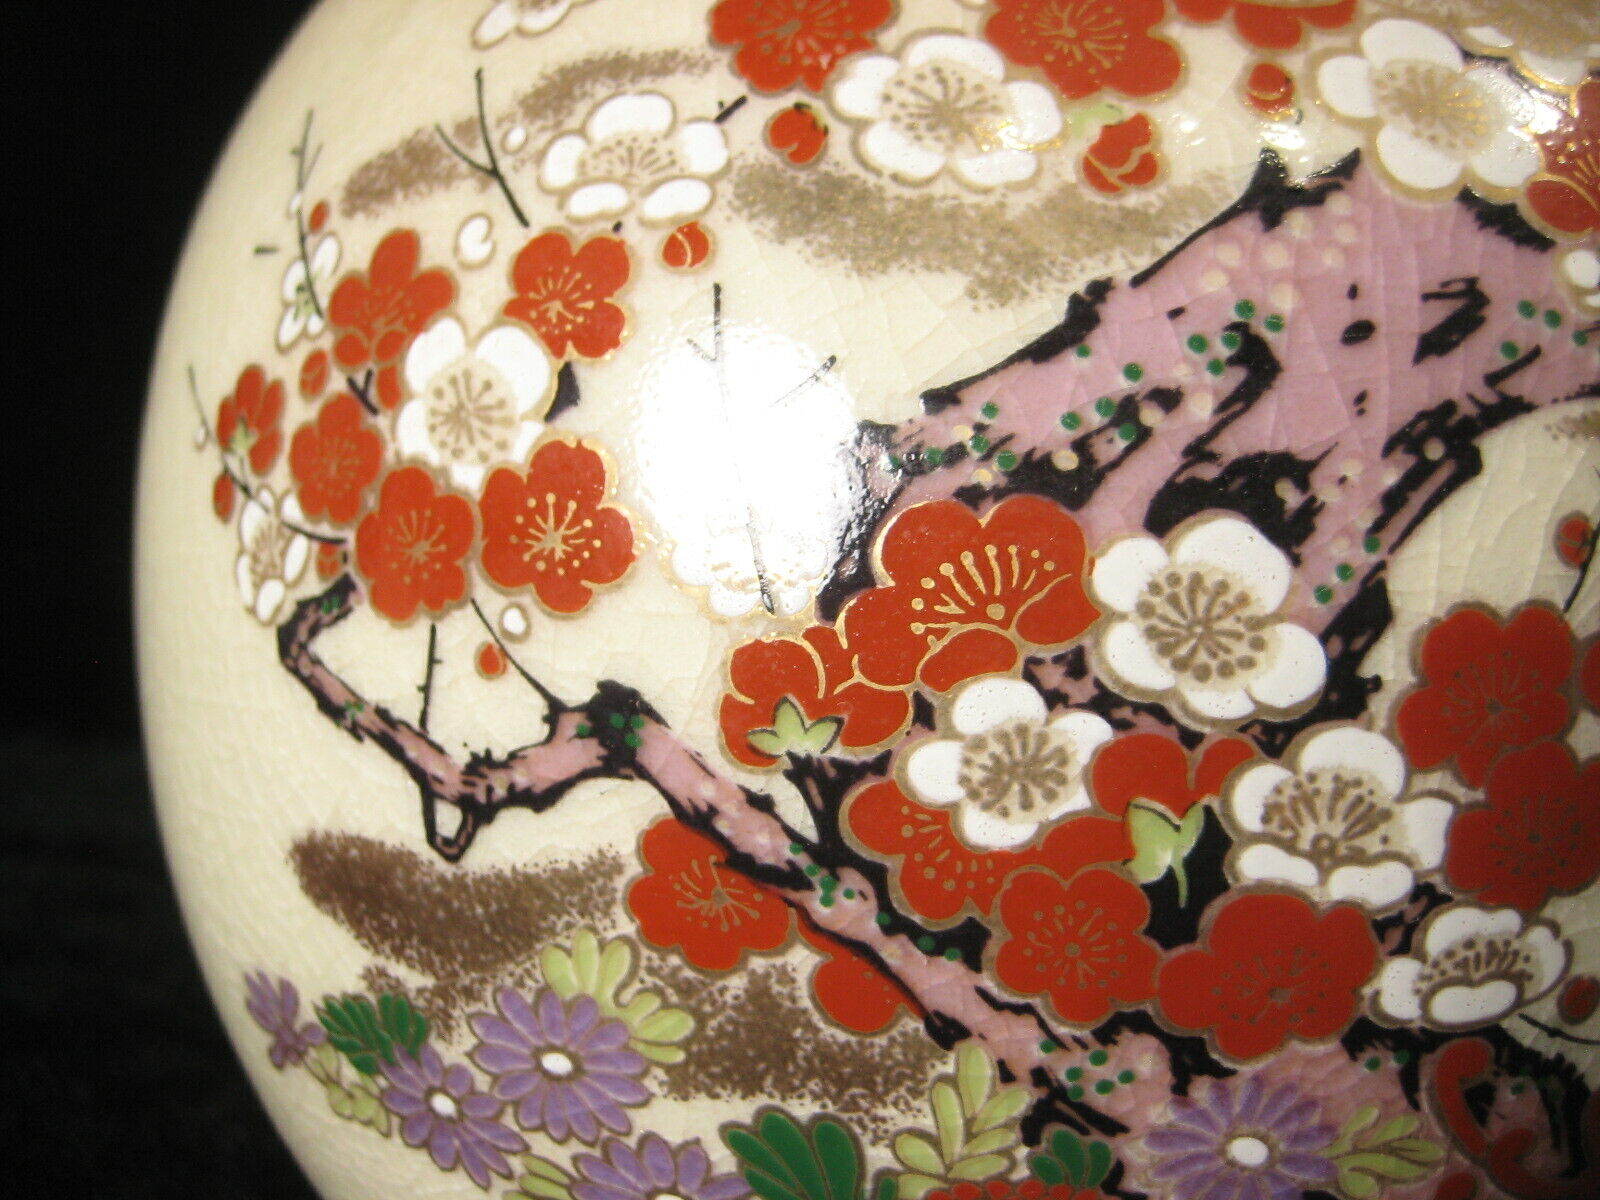 Blue Vase with Sakura Cherry Blossom Antique Japanese Porcelain Vase  Hand-painted Plum Table Vase Neutral